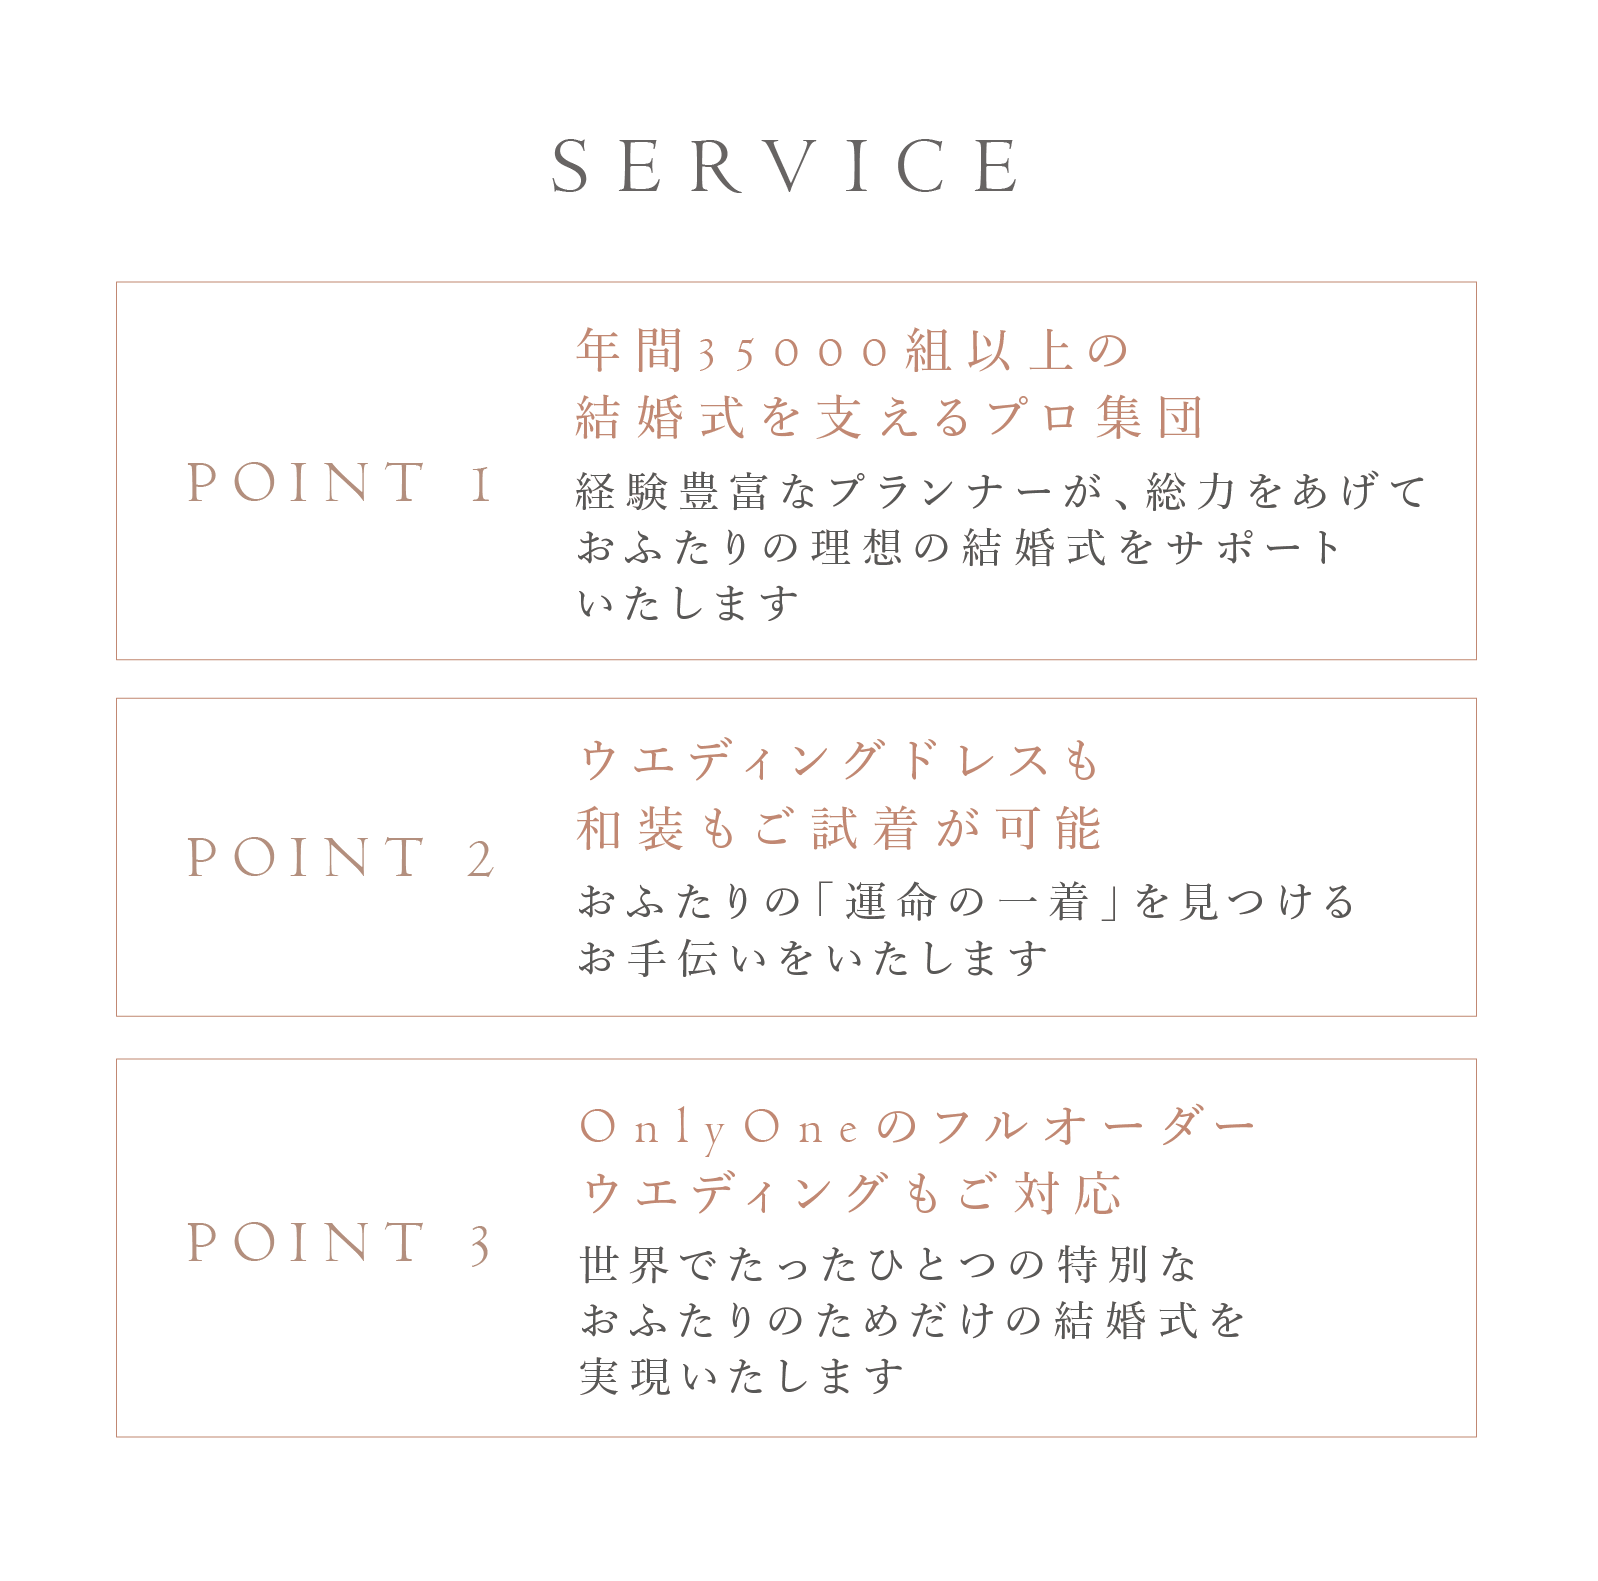 TAKAMI BRIDAL WEDDING DESK YOKOHAMAのサービスの特徴 スマートフォン用の画像